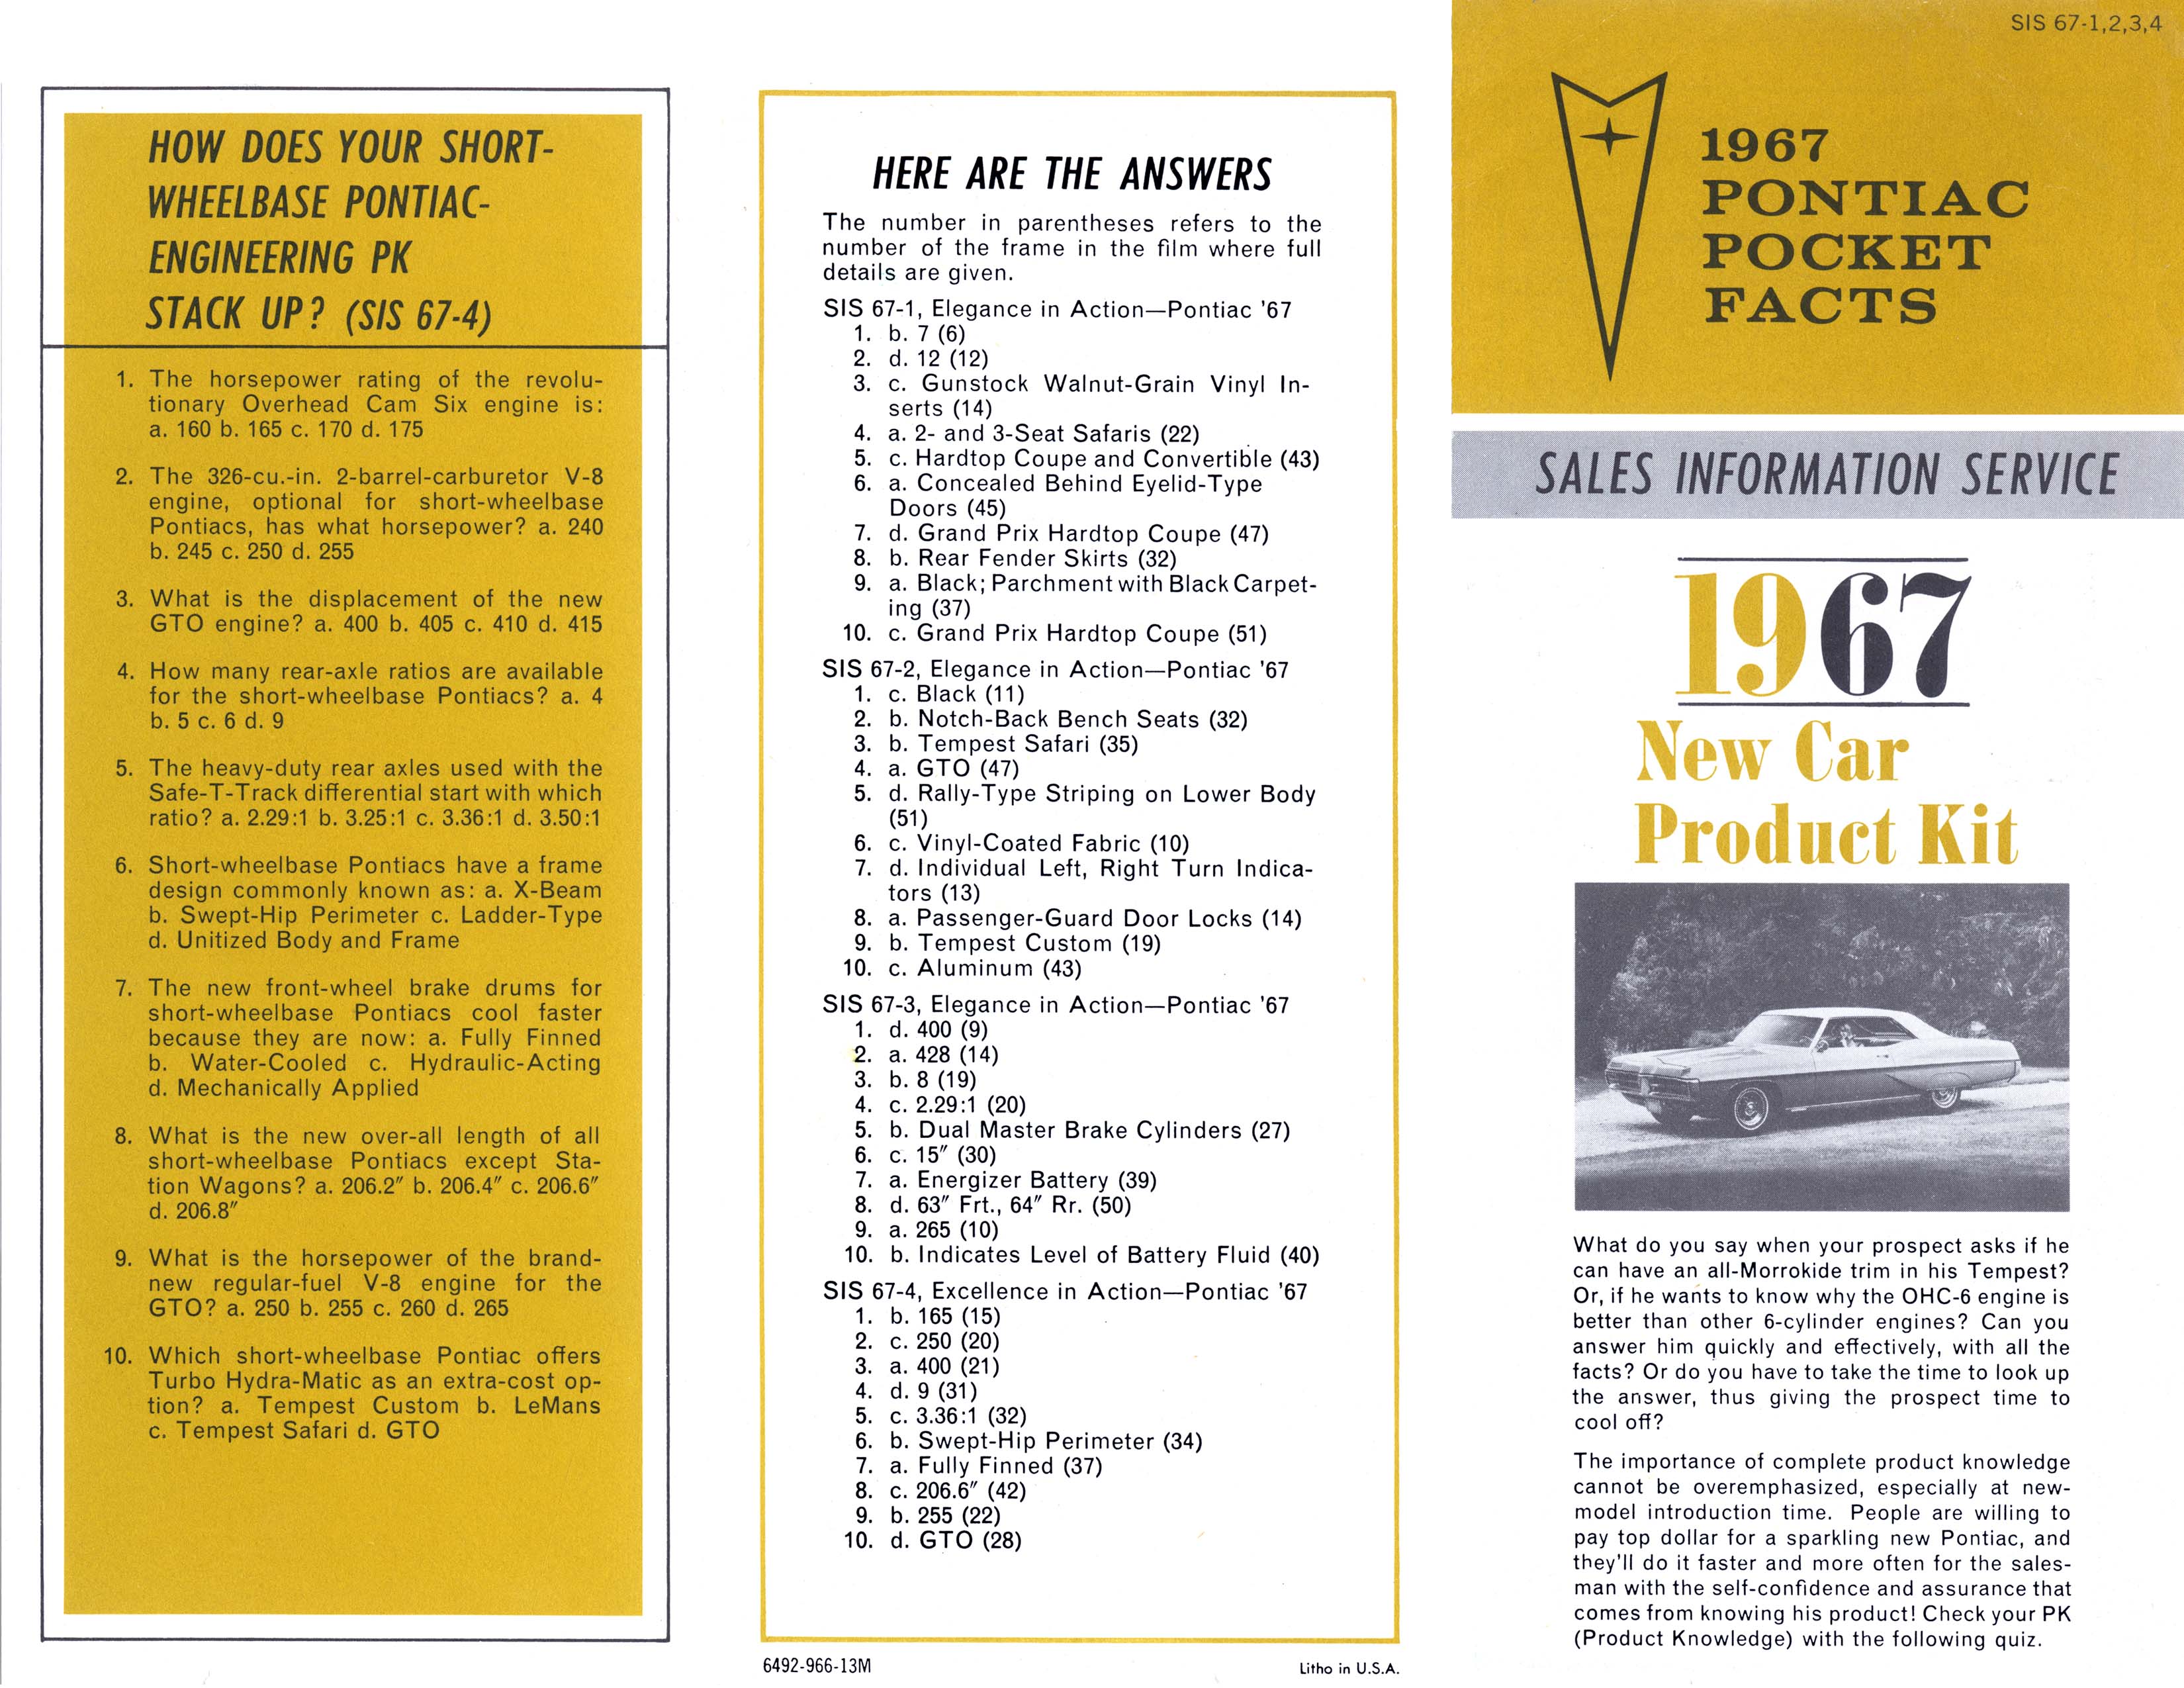 1967_Pontiac_Pocket_Product_Kit-01